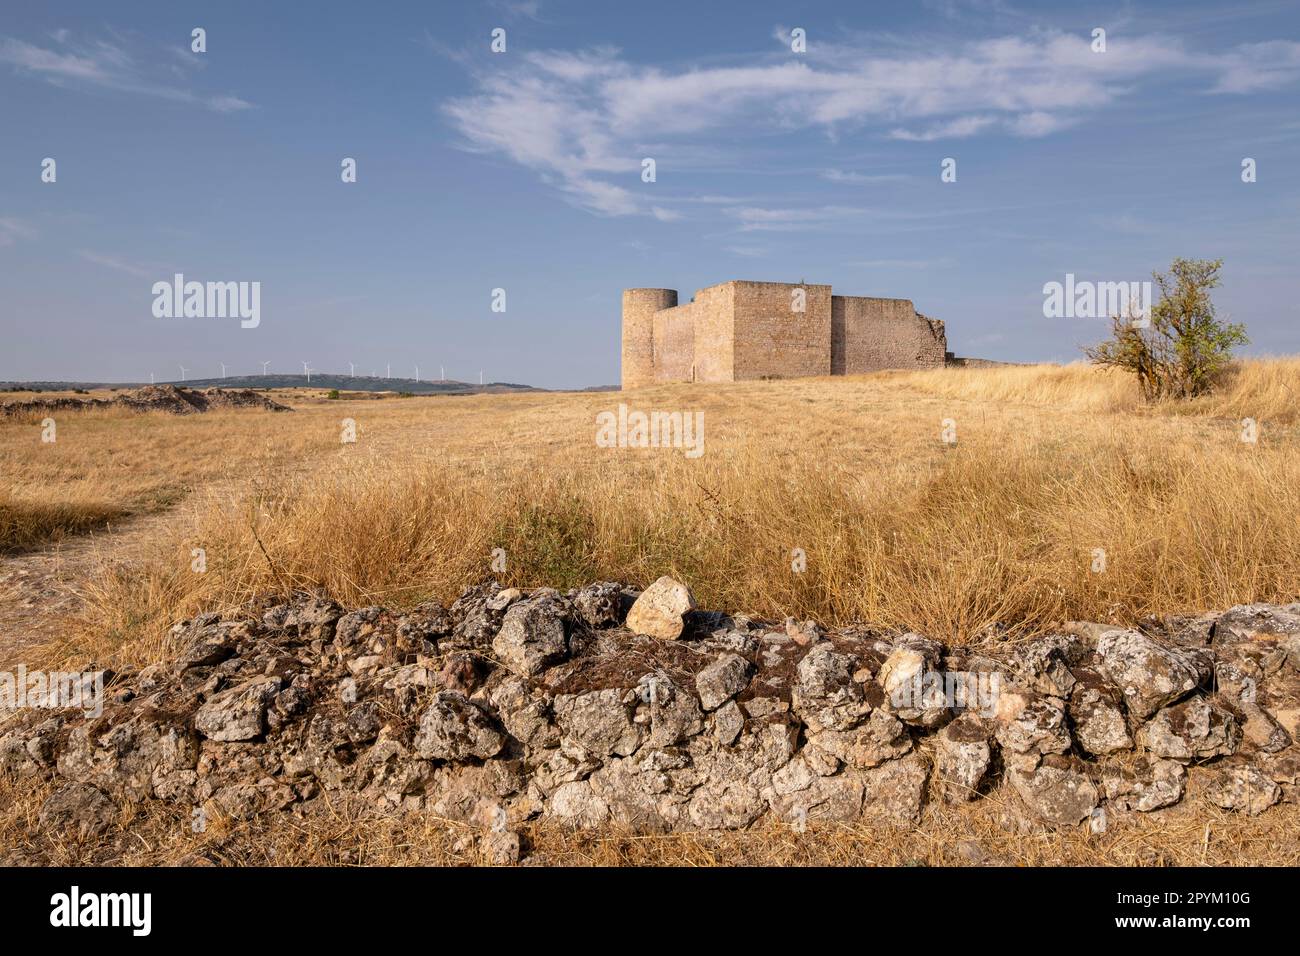 Castillo de Medinaceli, siglo XV, Medinaceli, Soria,  comunidad autónoma de Castilla y León, Spain, Europe Stock Photo